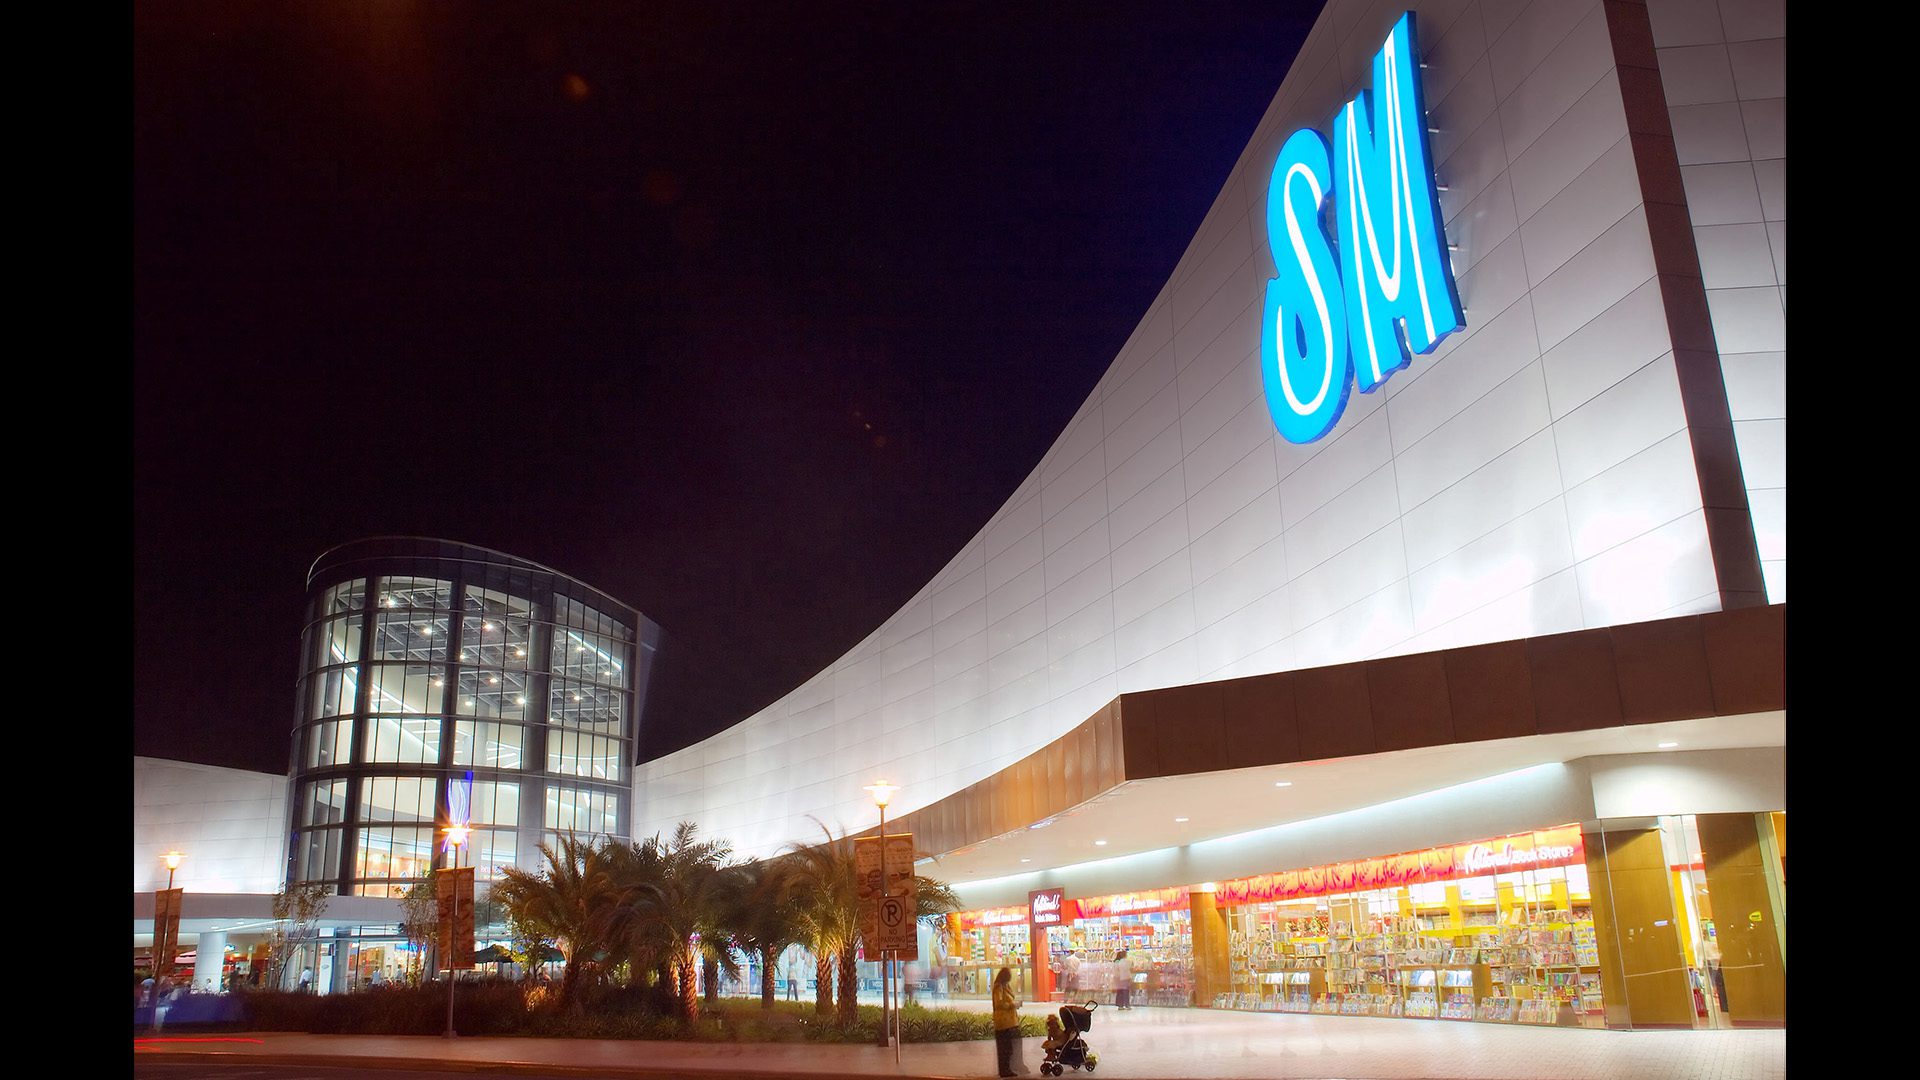 TTTM SM Mall of Asia